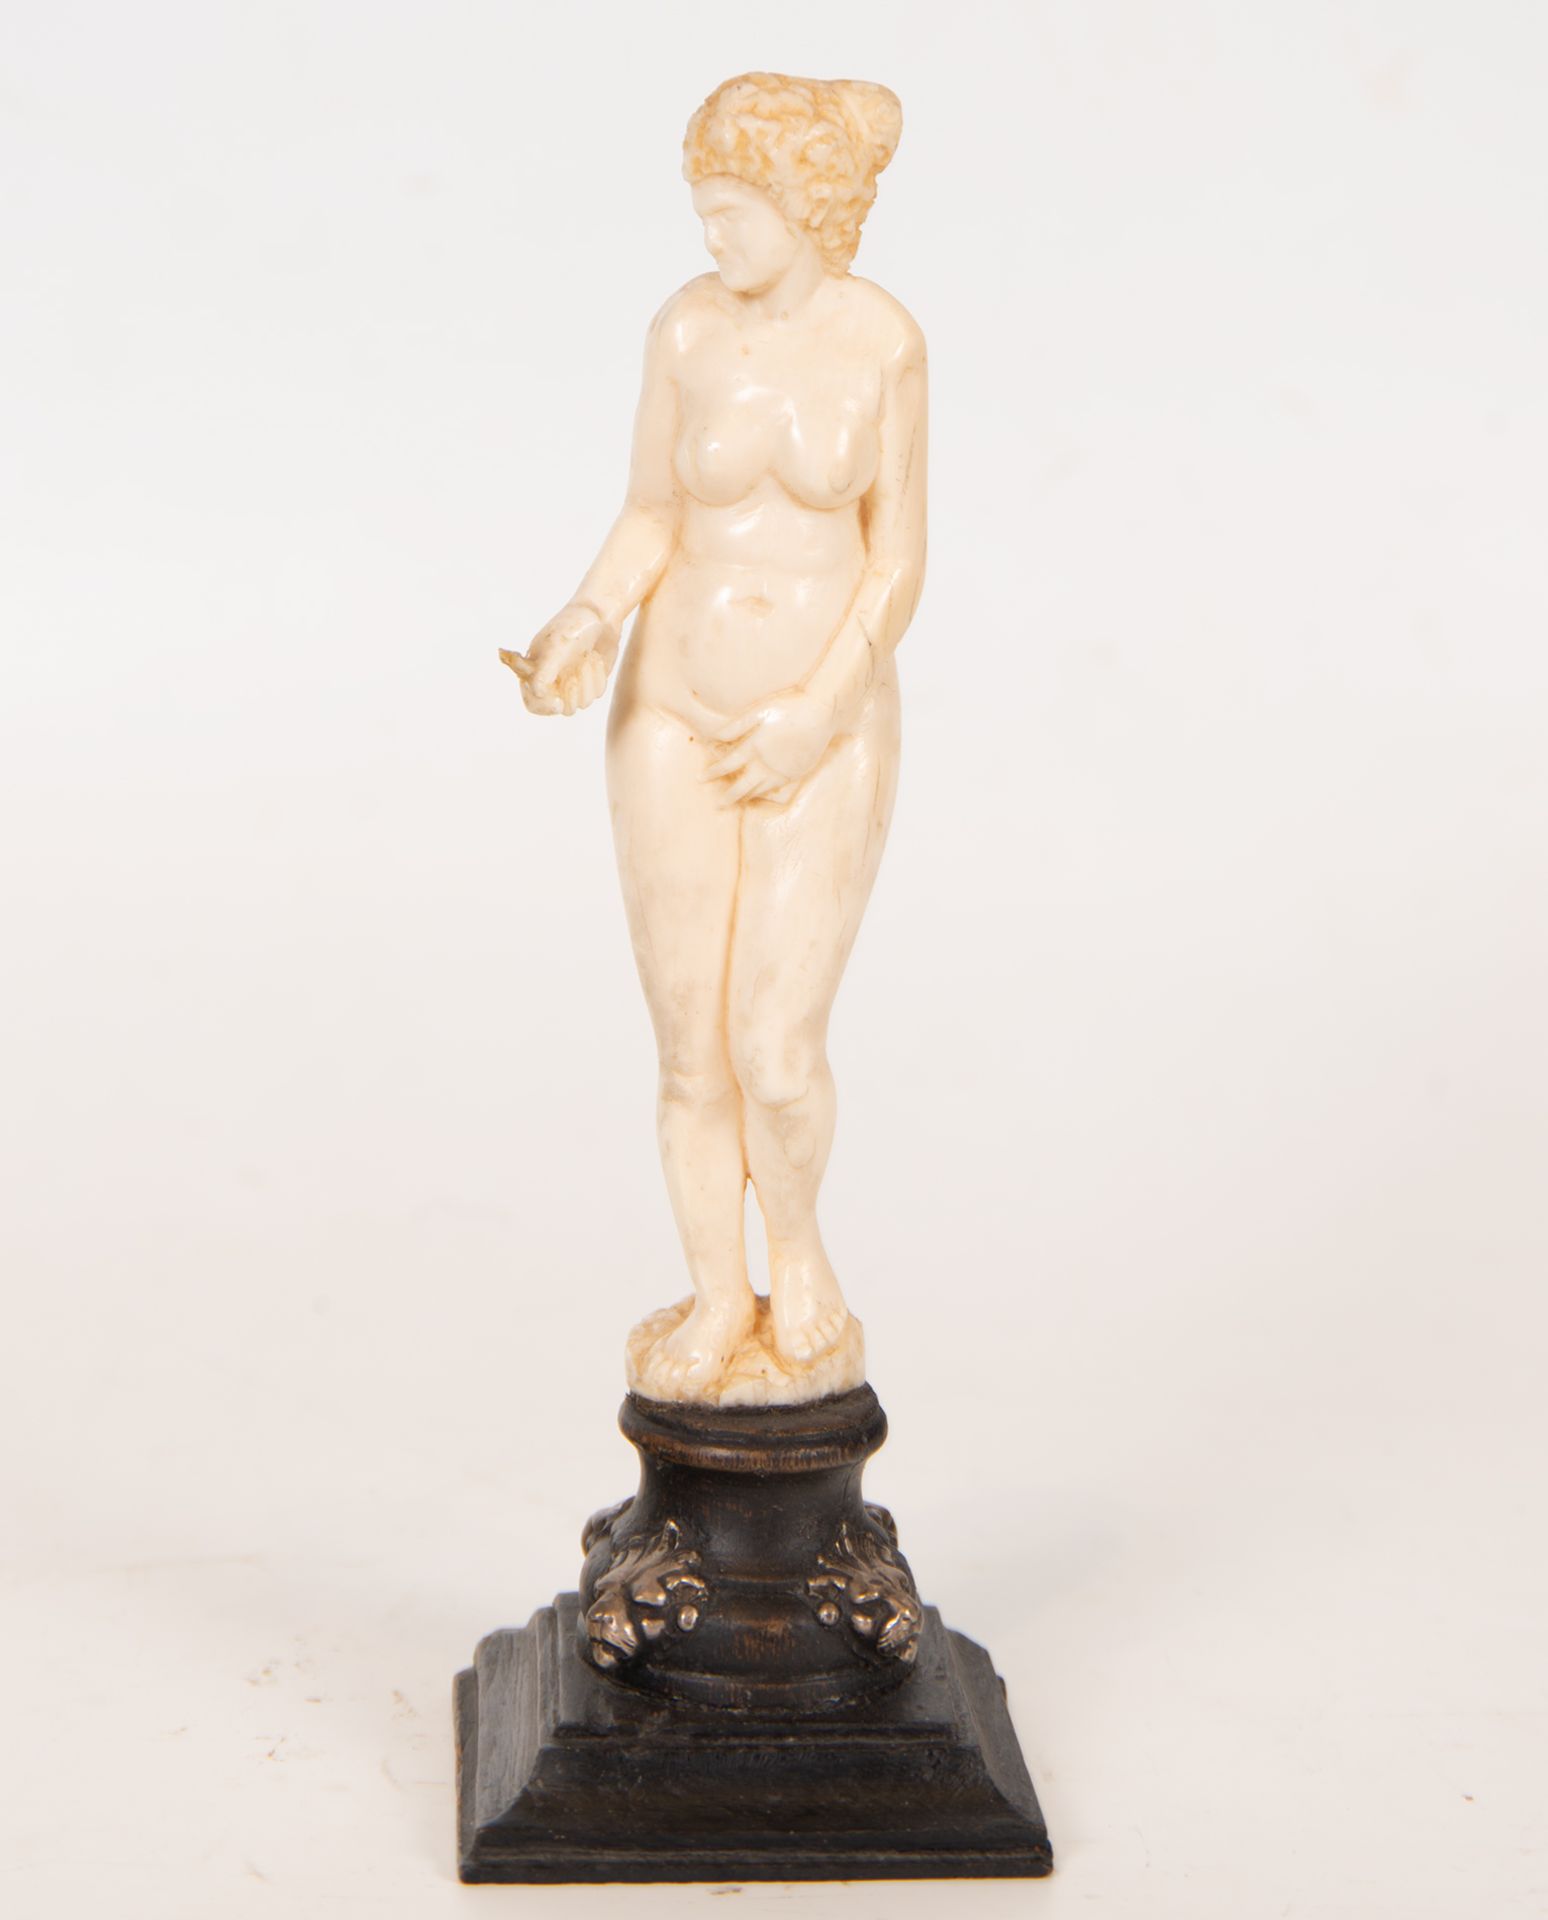 Aphrodite in Ivory, 17th century Flemish work